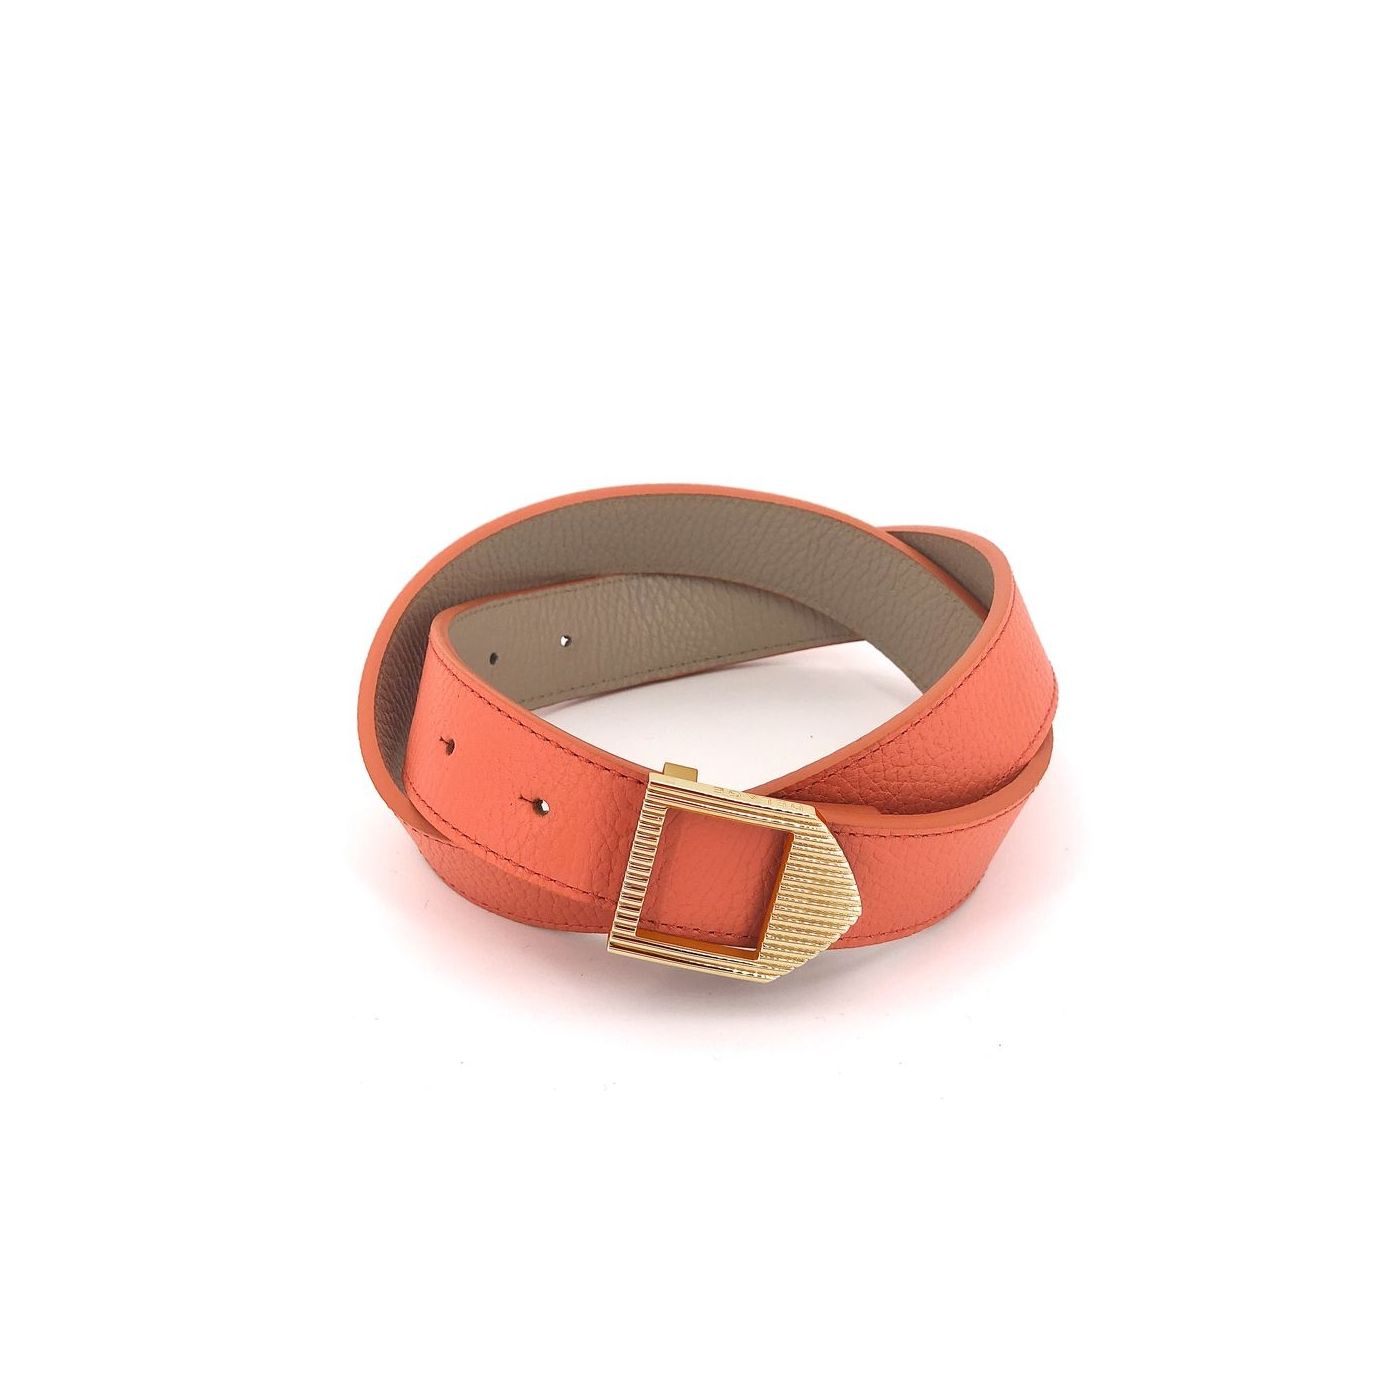 Reversible leather belt orange & brown / gold buckle